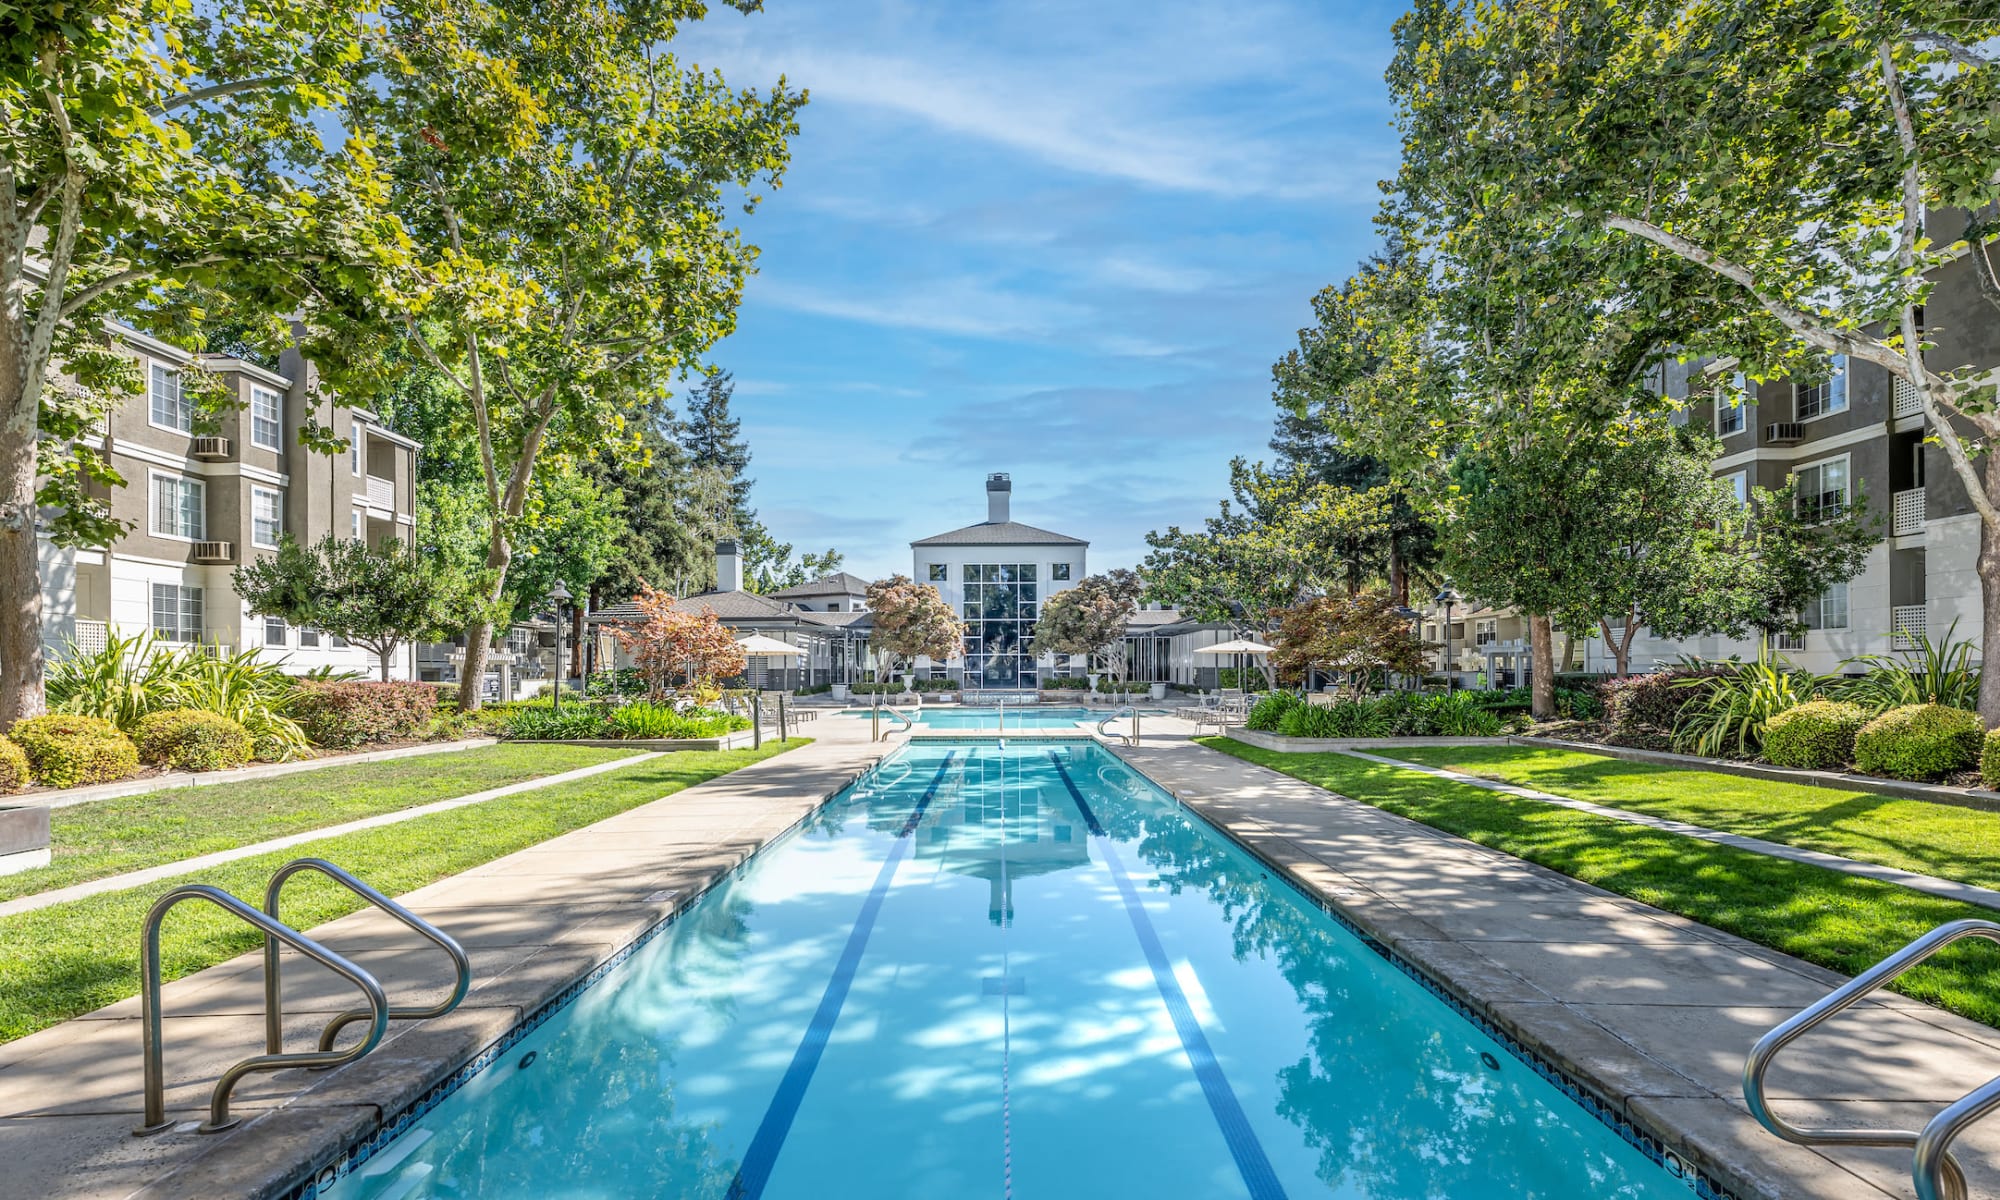 Lap Pool Bella Vista Apartments in Santa Clara, California